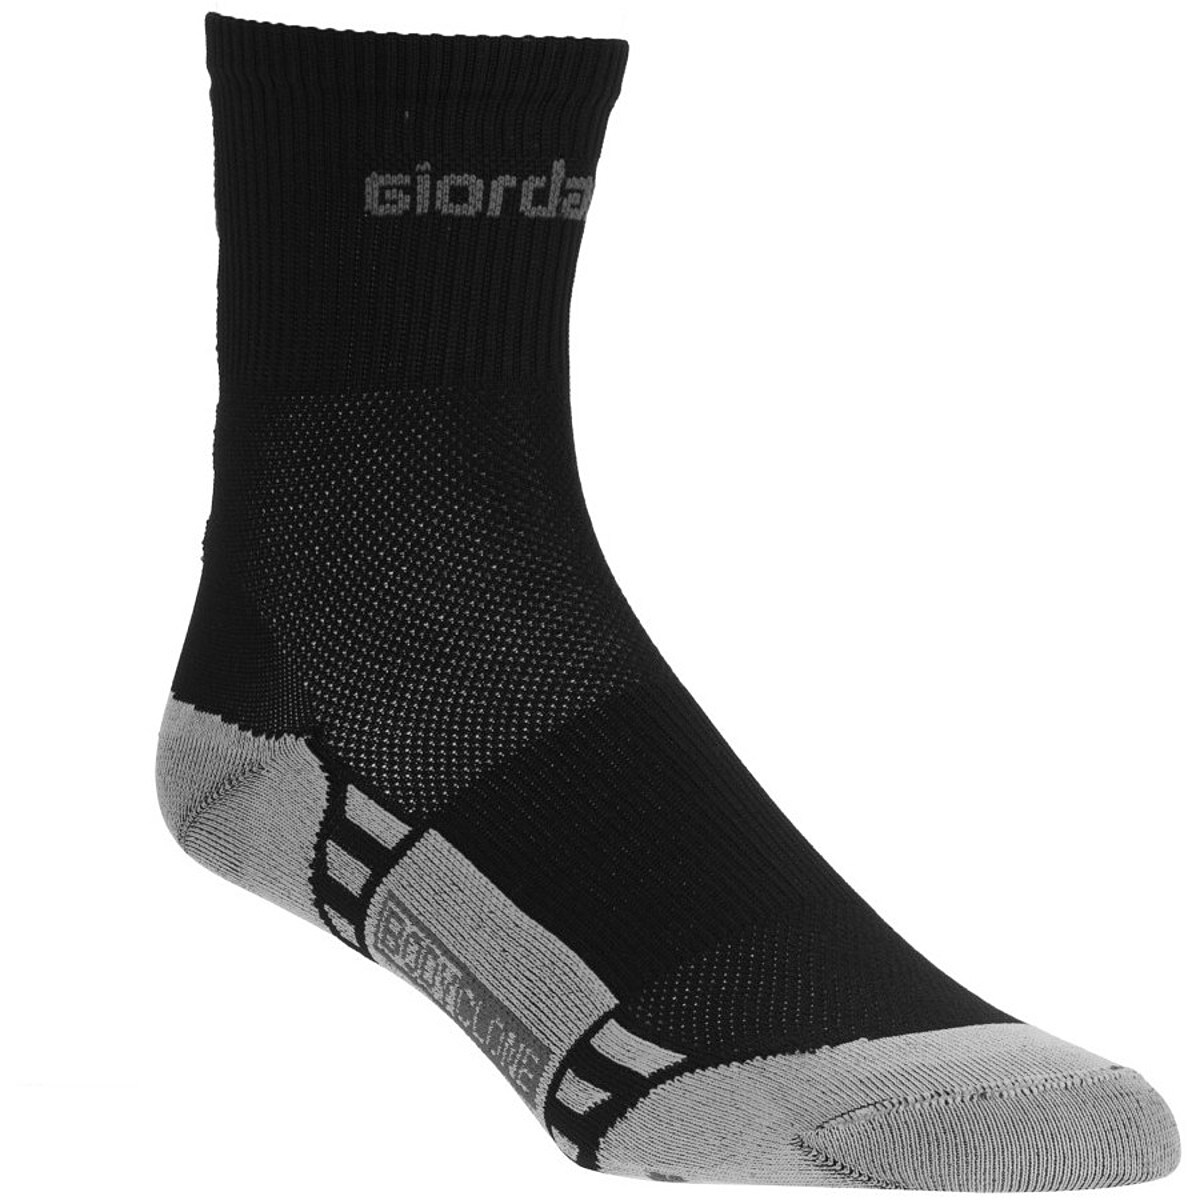 Giordana FormaRed Carbon Mid Cuff Socks Men's